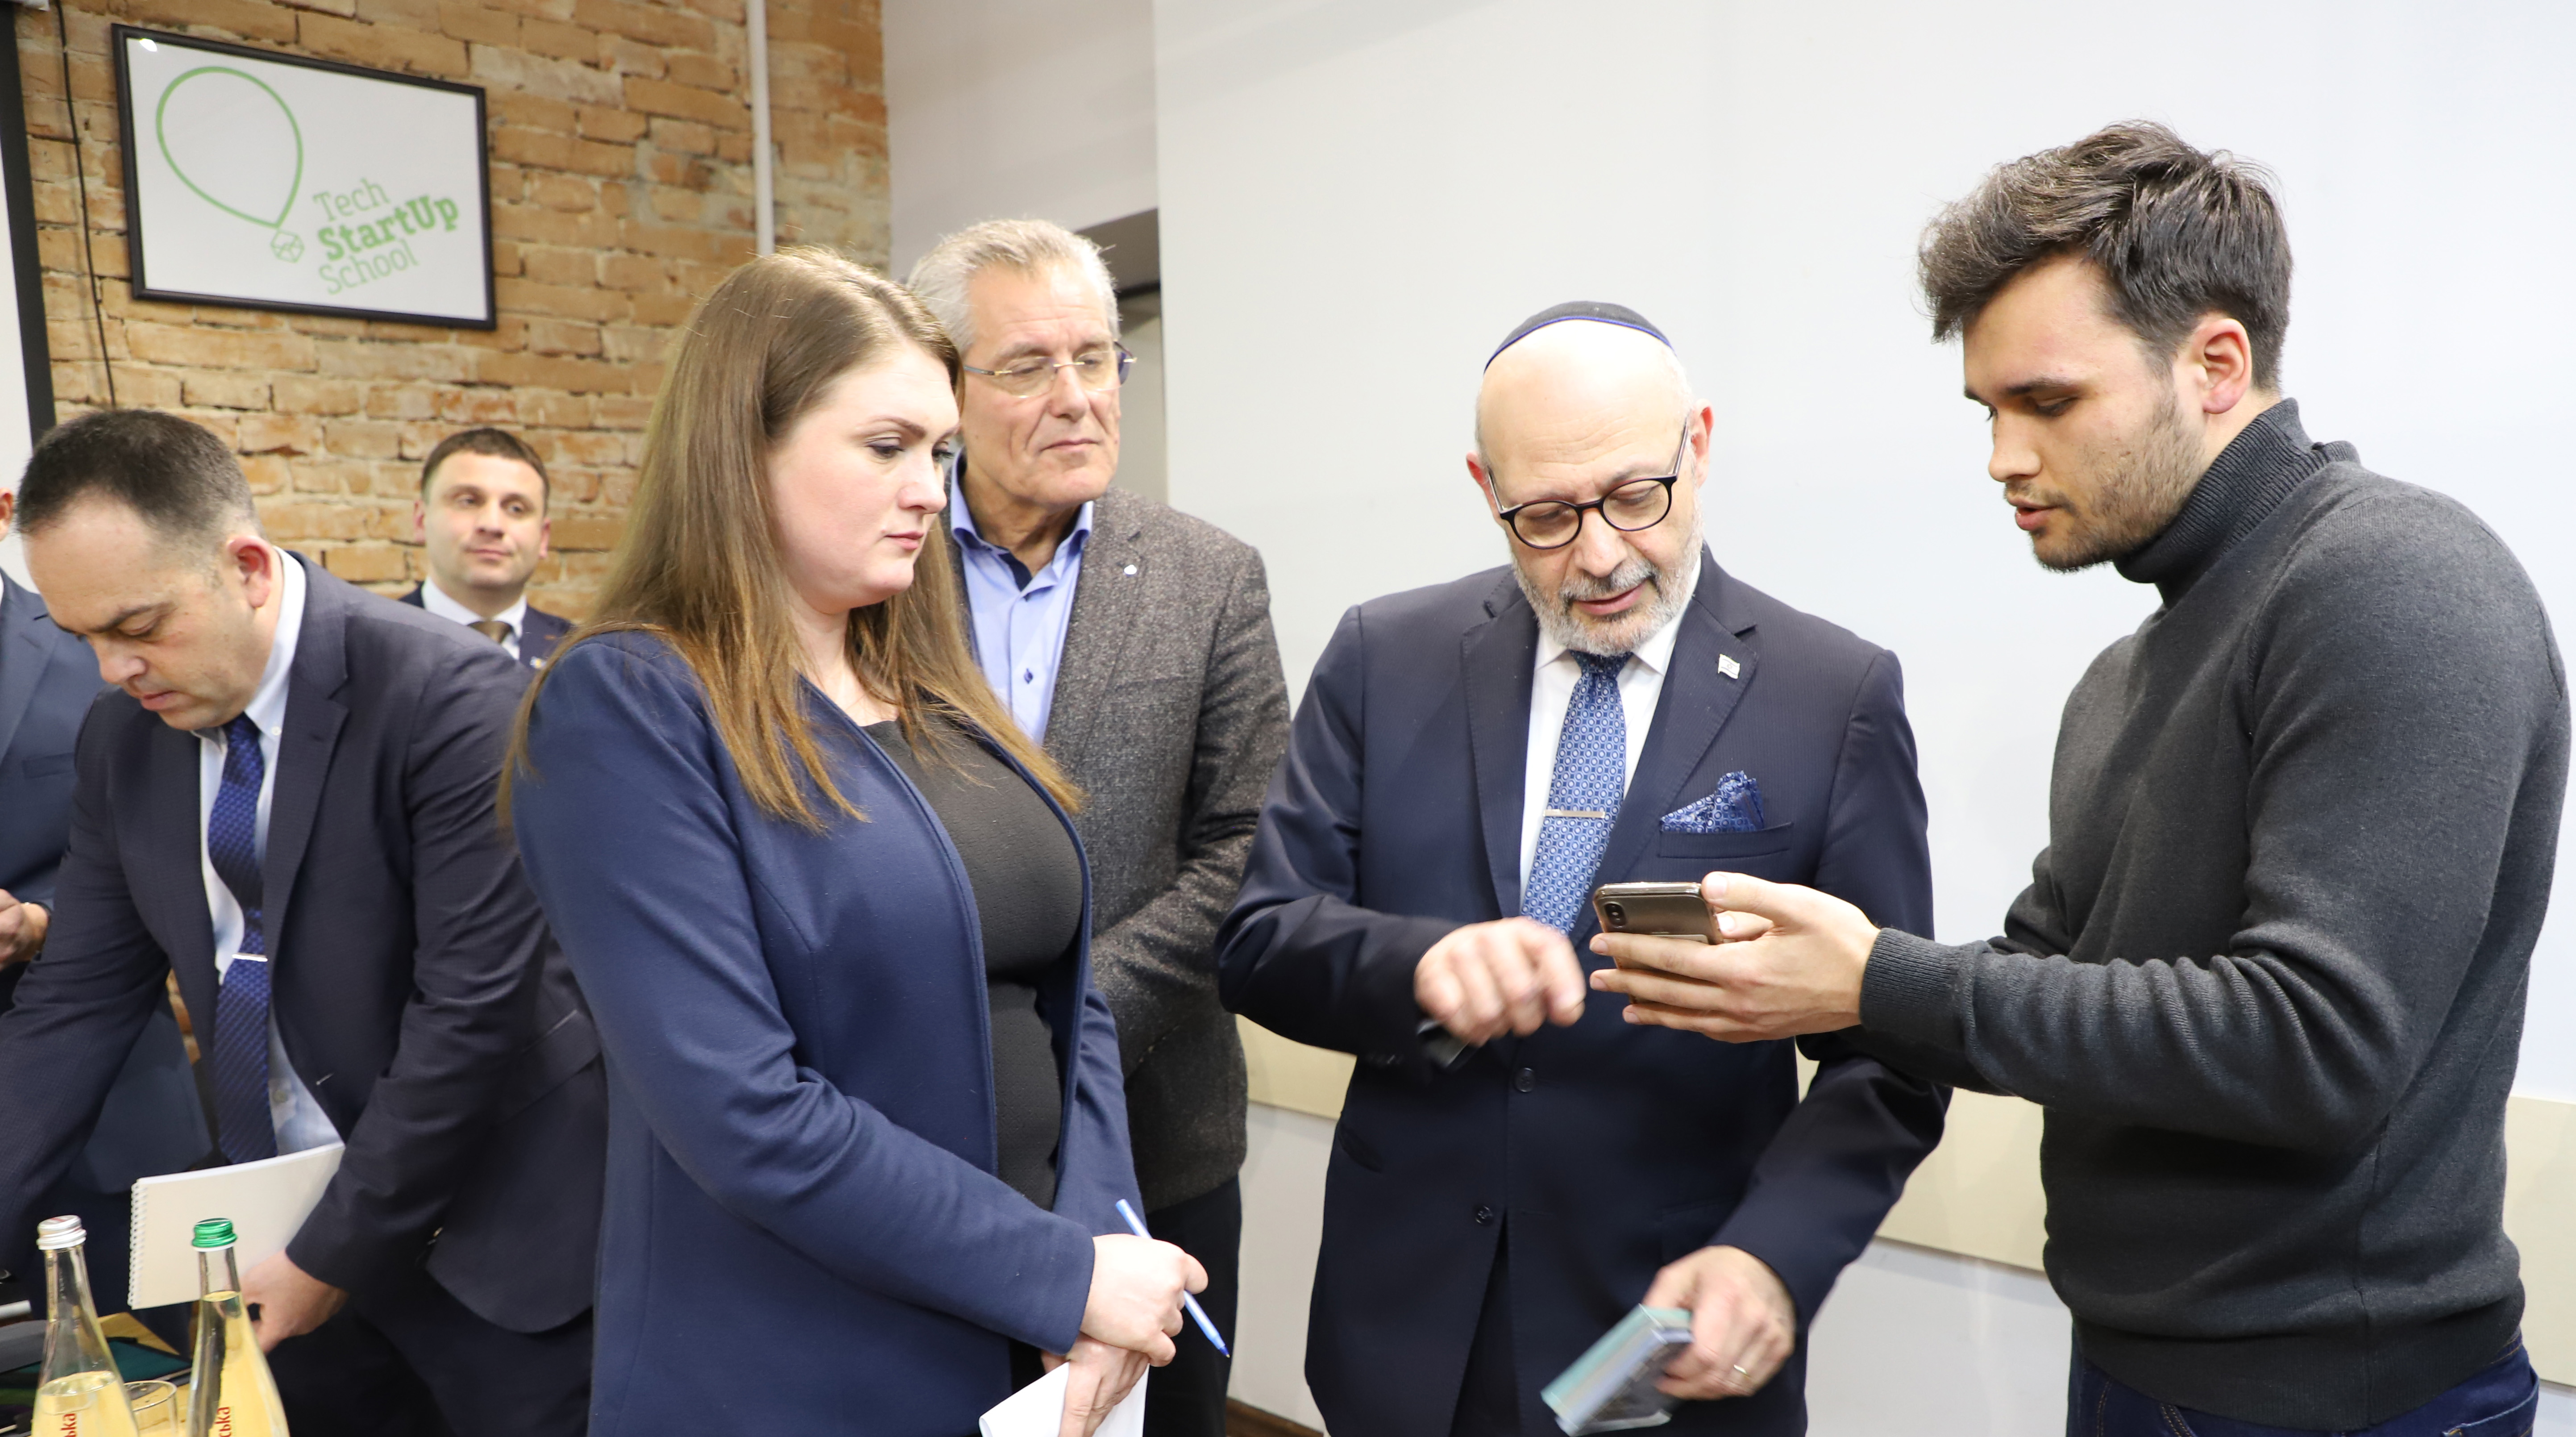 Посол Ізраїлю у стартапшколі Львівської політехніки побував Посол Ізраїлю